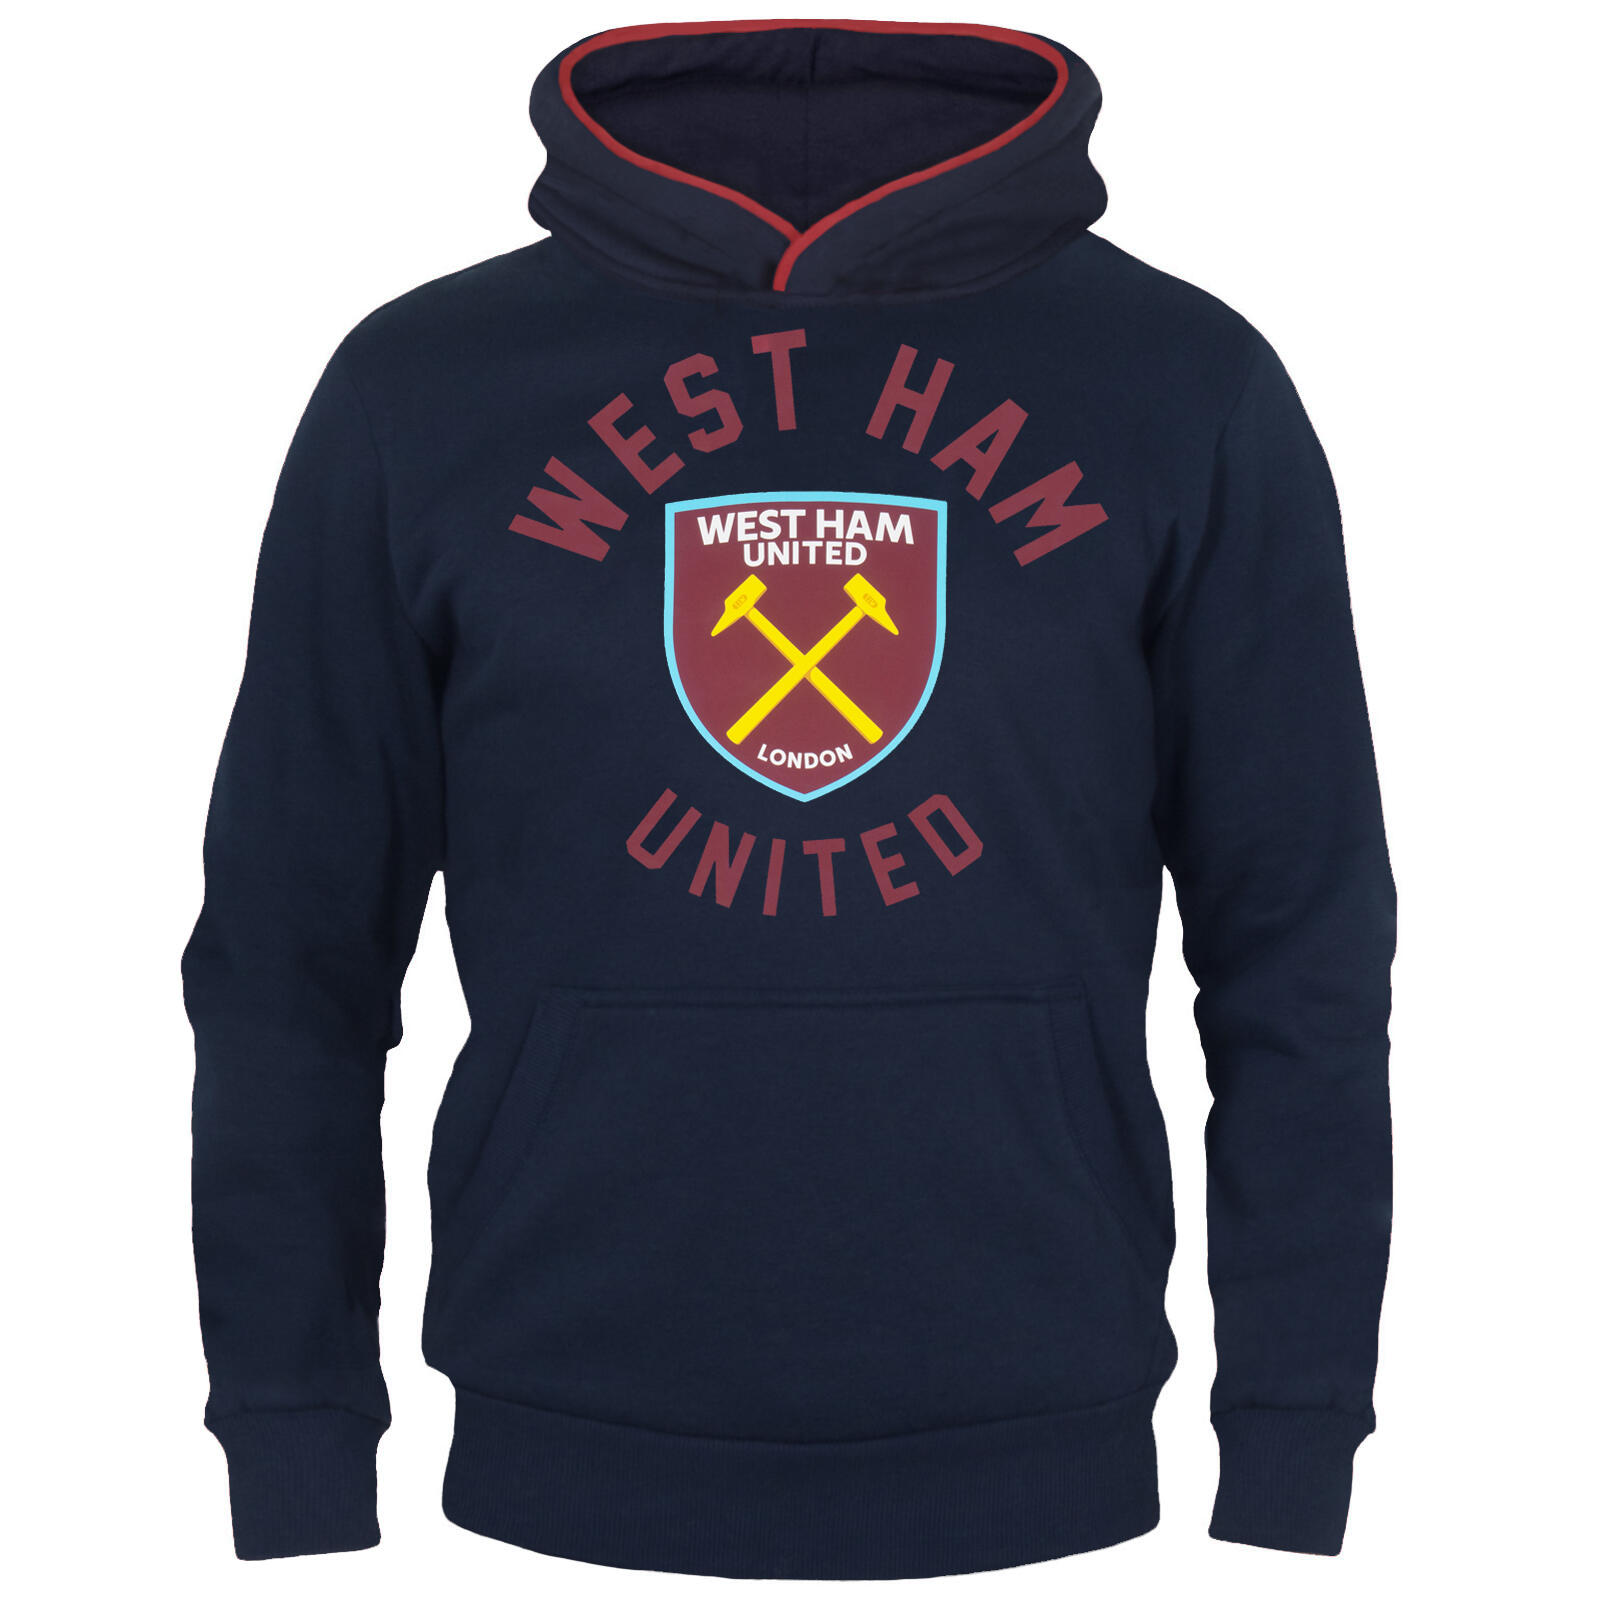 WEST HAM UNITED West Ham United Boys Hoody Fleece Graphic Kids OFFICIAL Football Gift